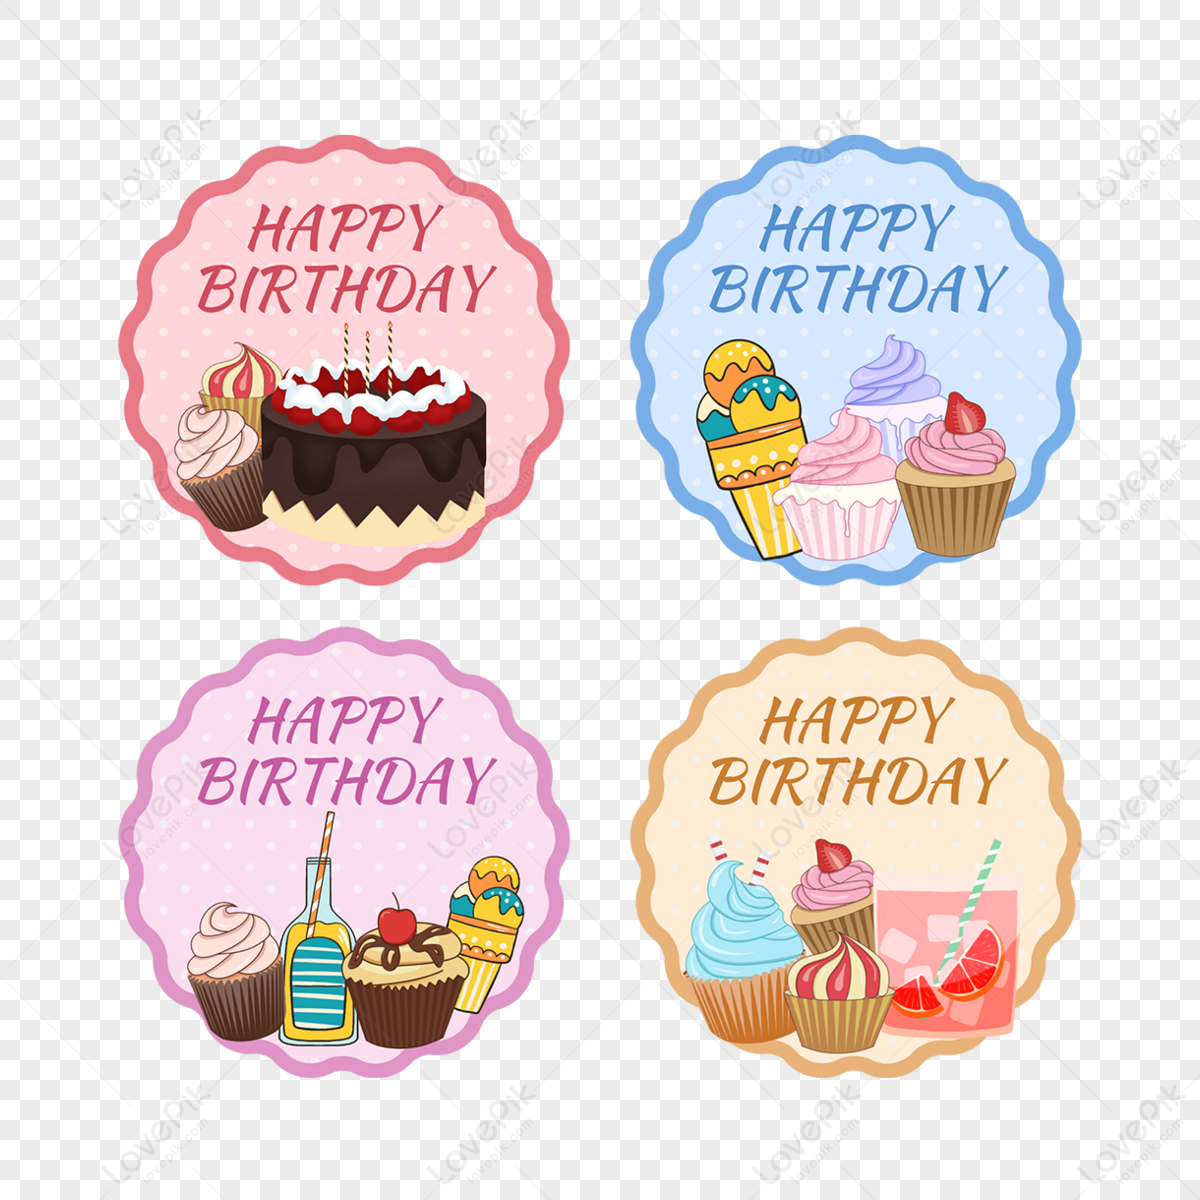 Grey birthday cake logo #AD , #SPONSORED, #paid, #birthday, #cake, #logo,  #Grey | Cake logo, Bakery logo design, Birthday design